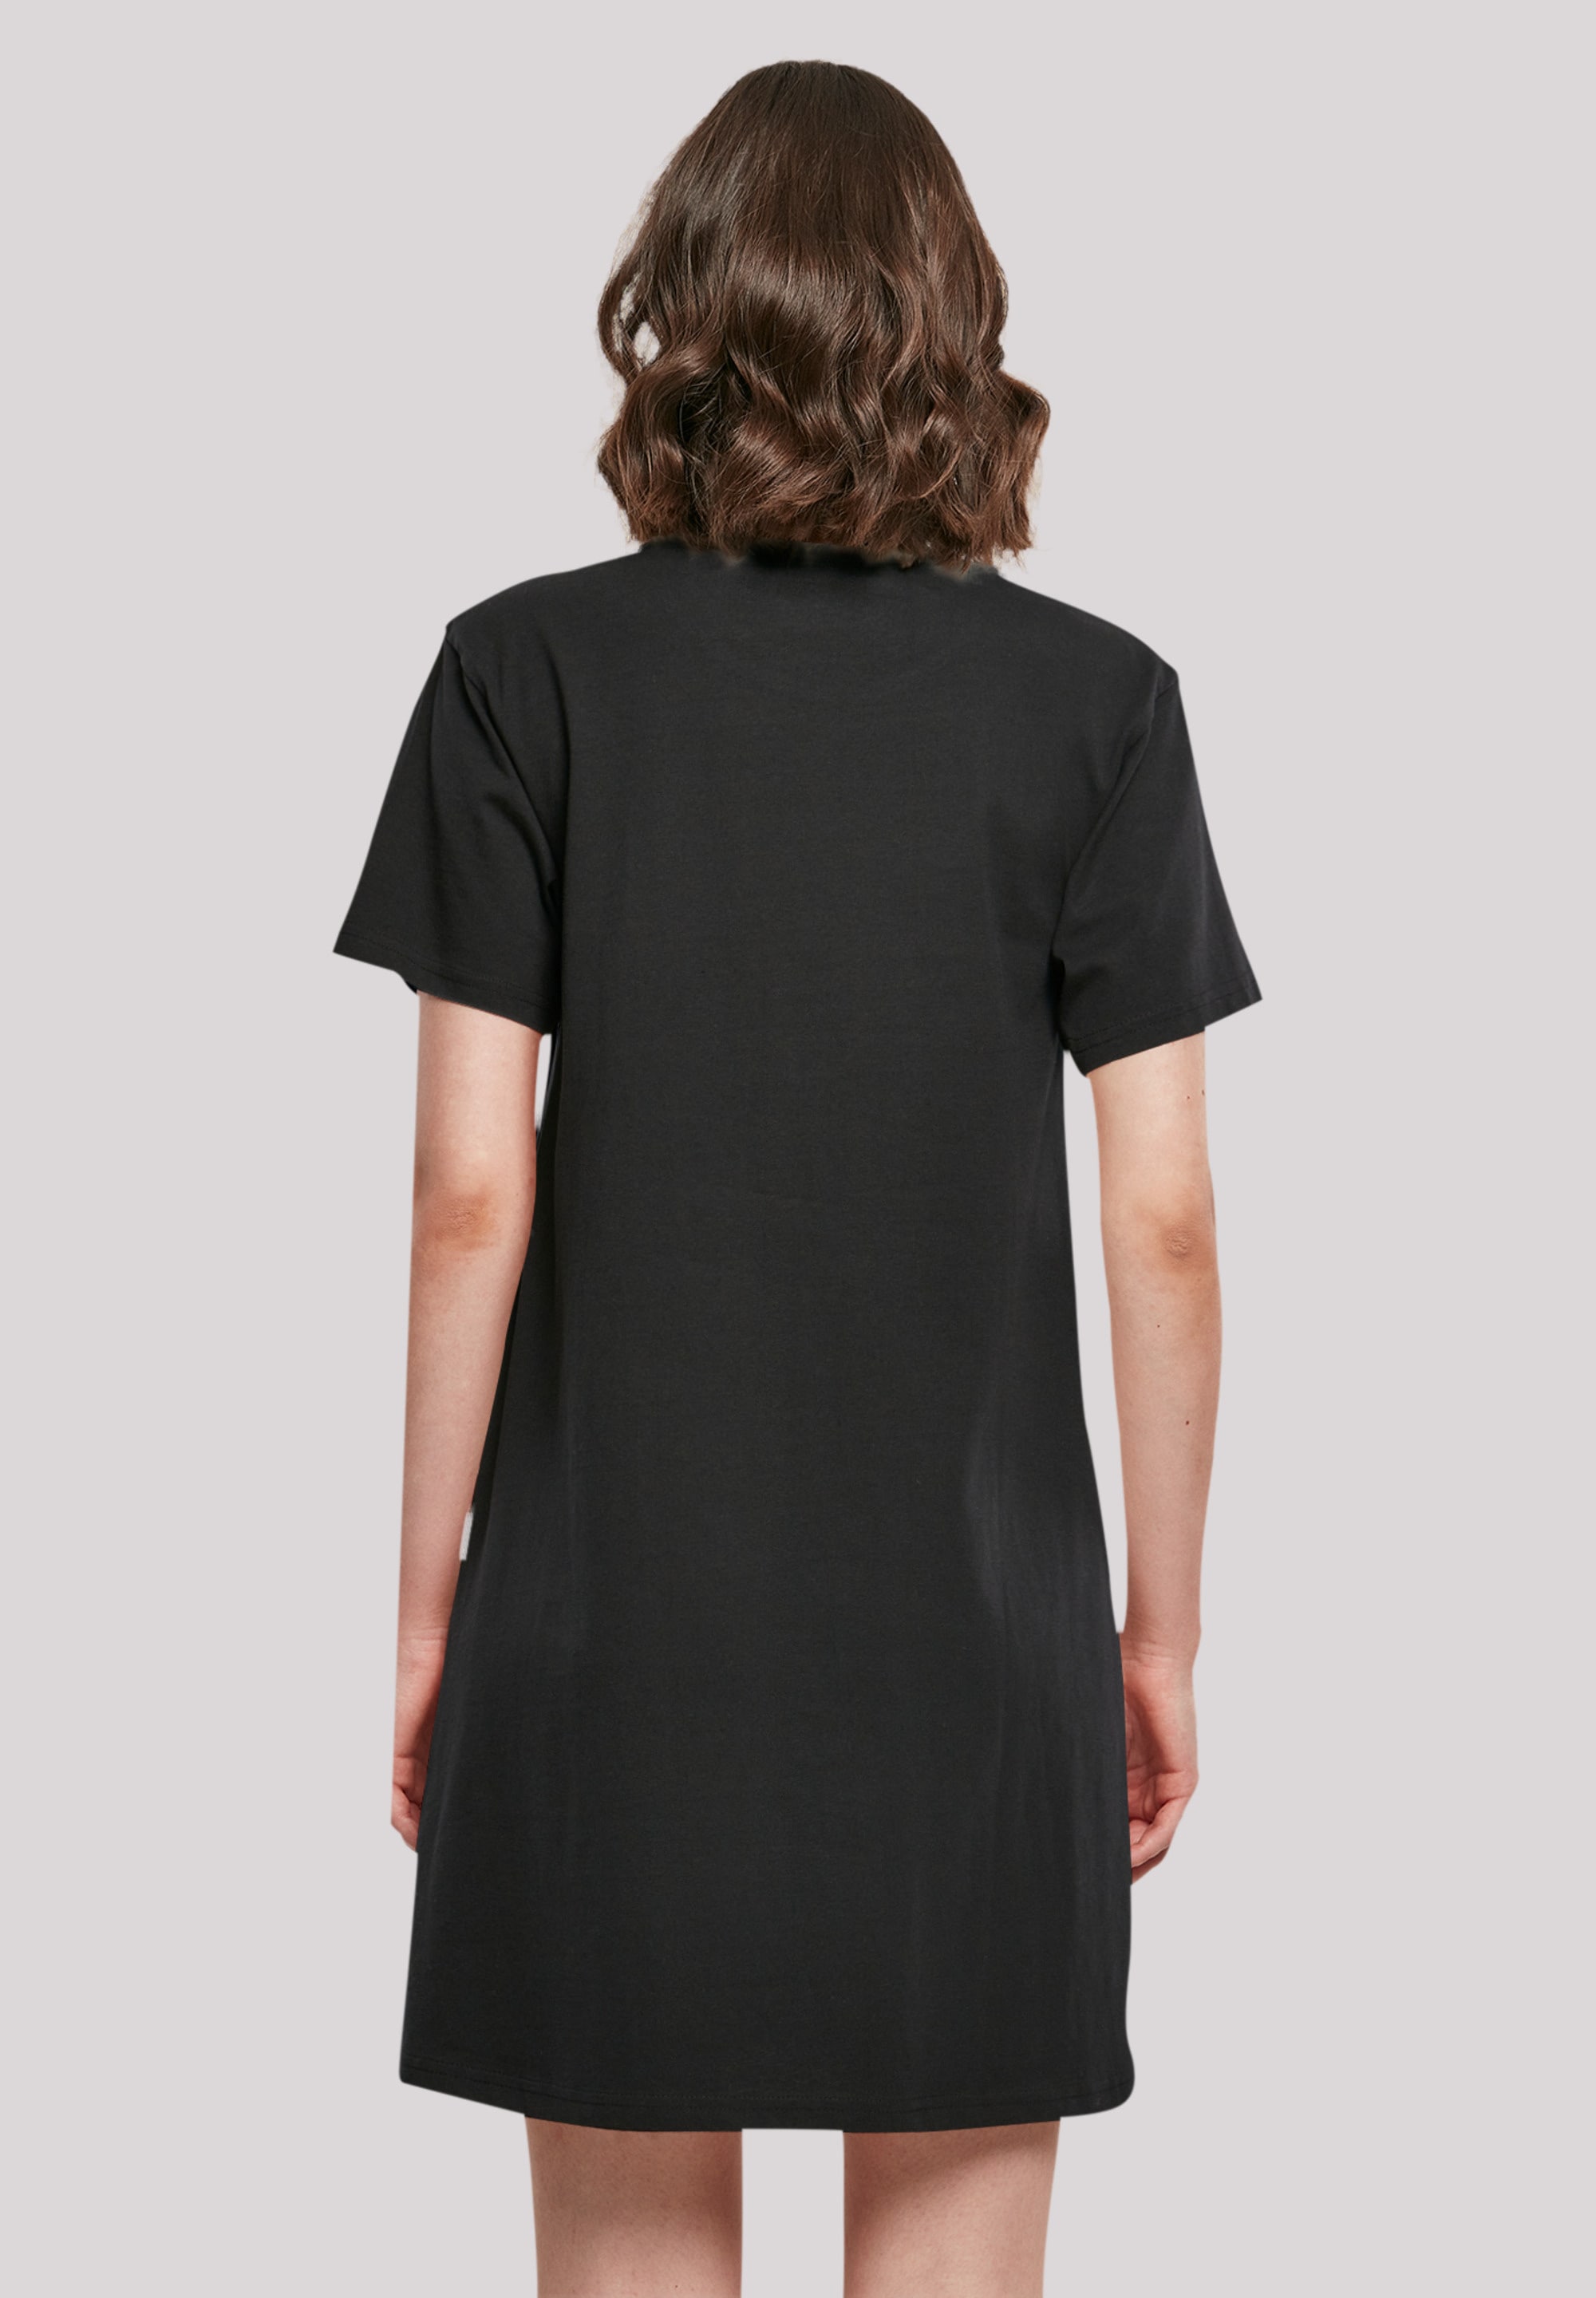 F4NT4STIC Shirtkleid »Blumenmuster Damen T-Shirt Kleid«, Print